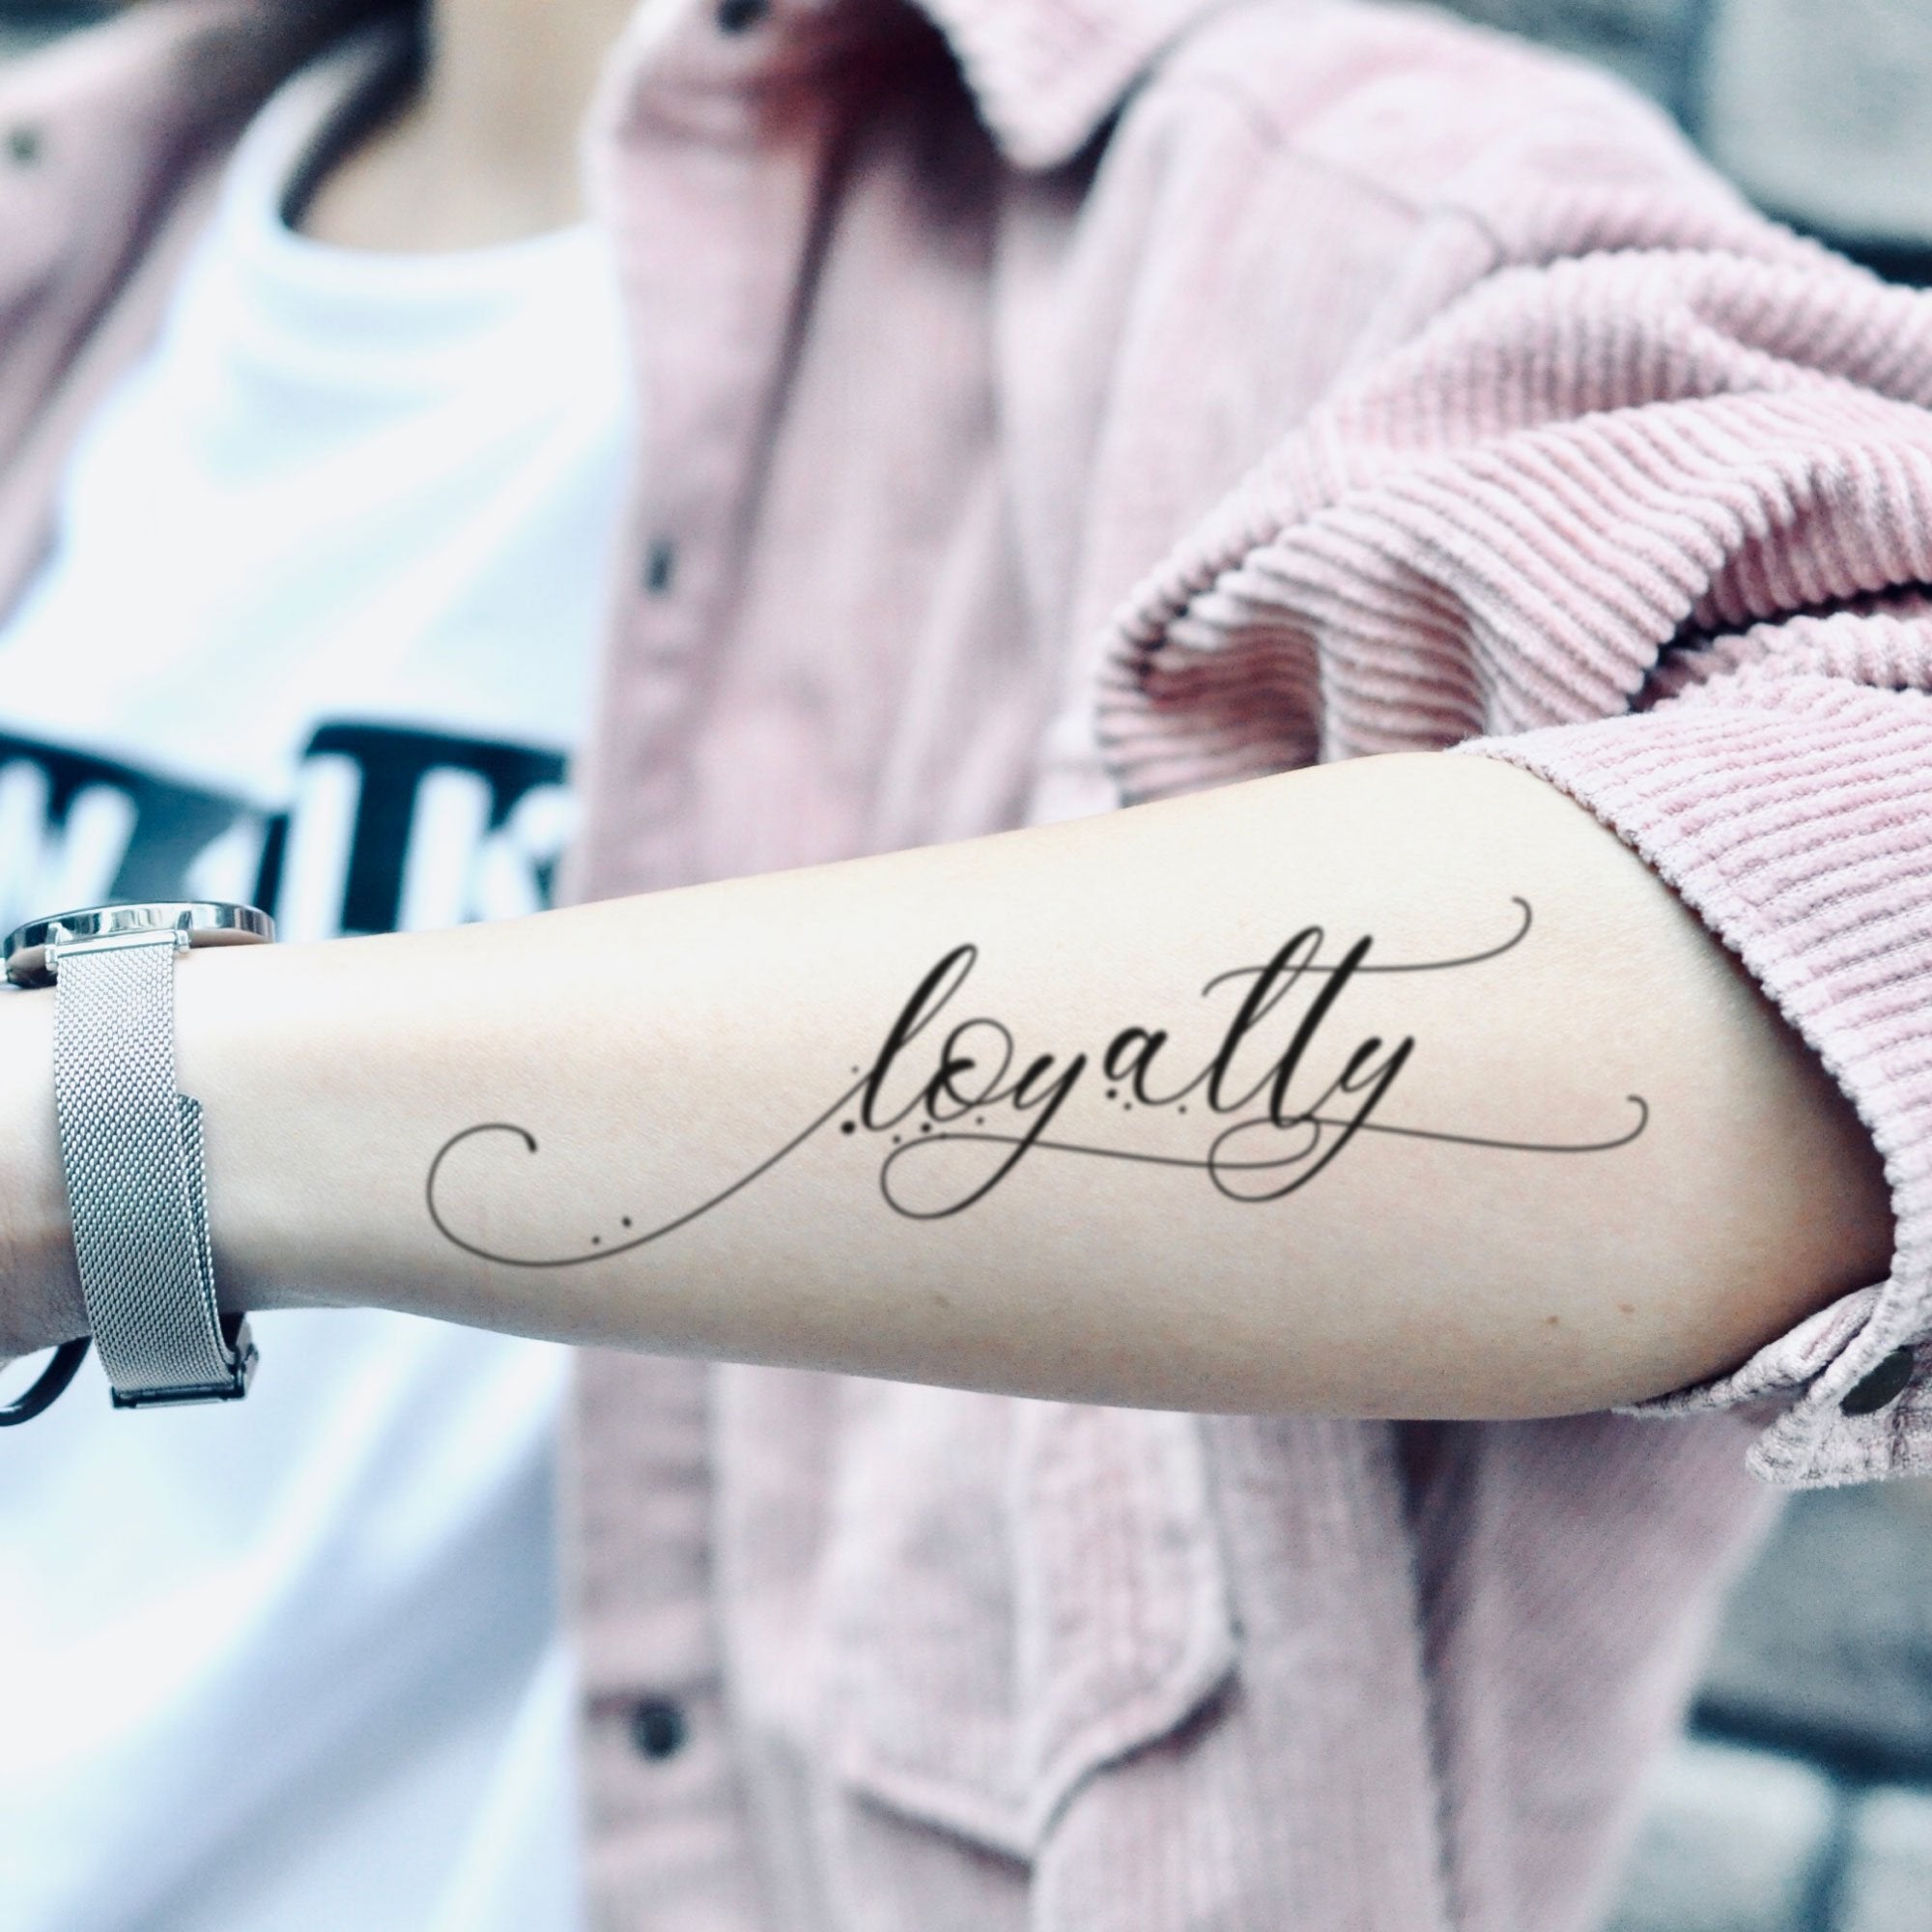 Ambigram tattoo on her arm | Joel Gordon Photography